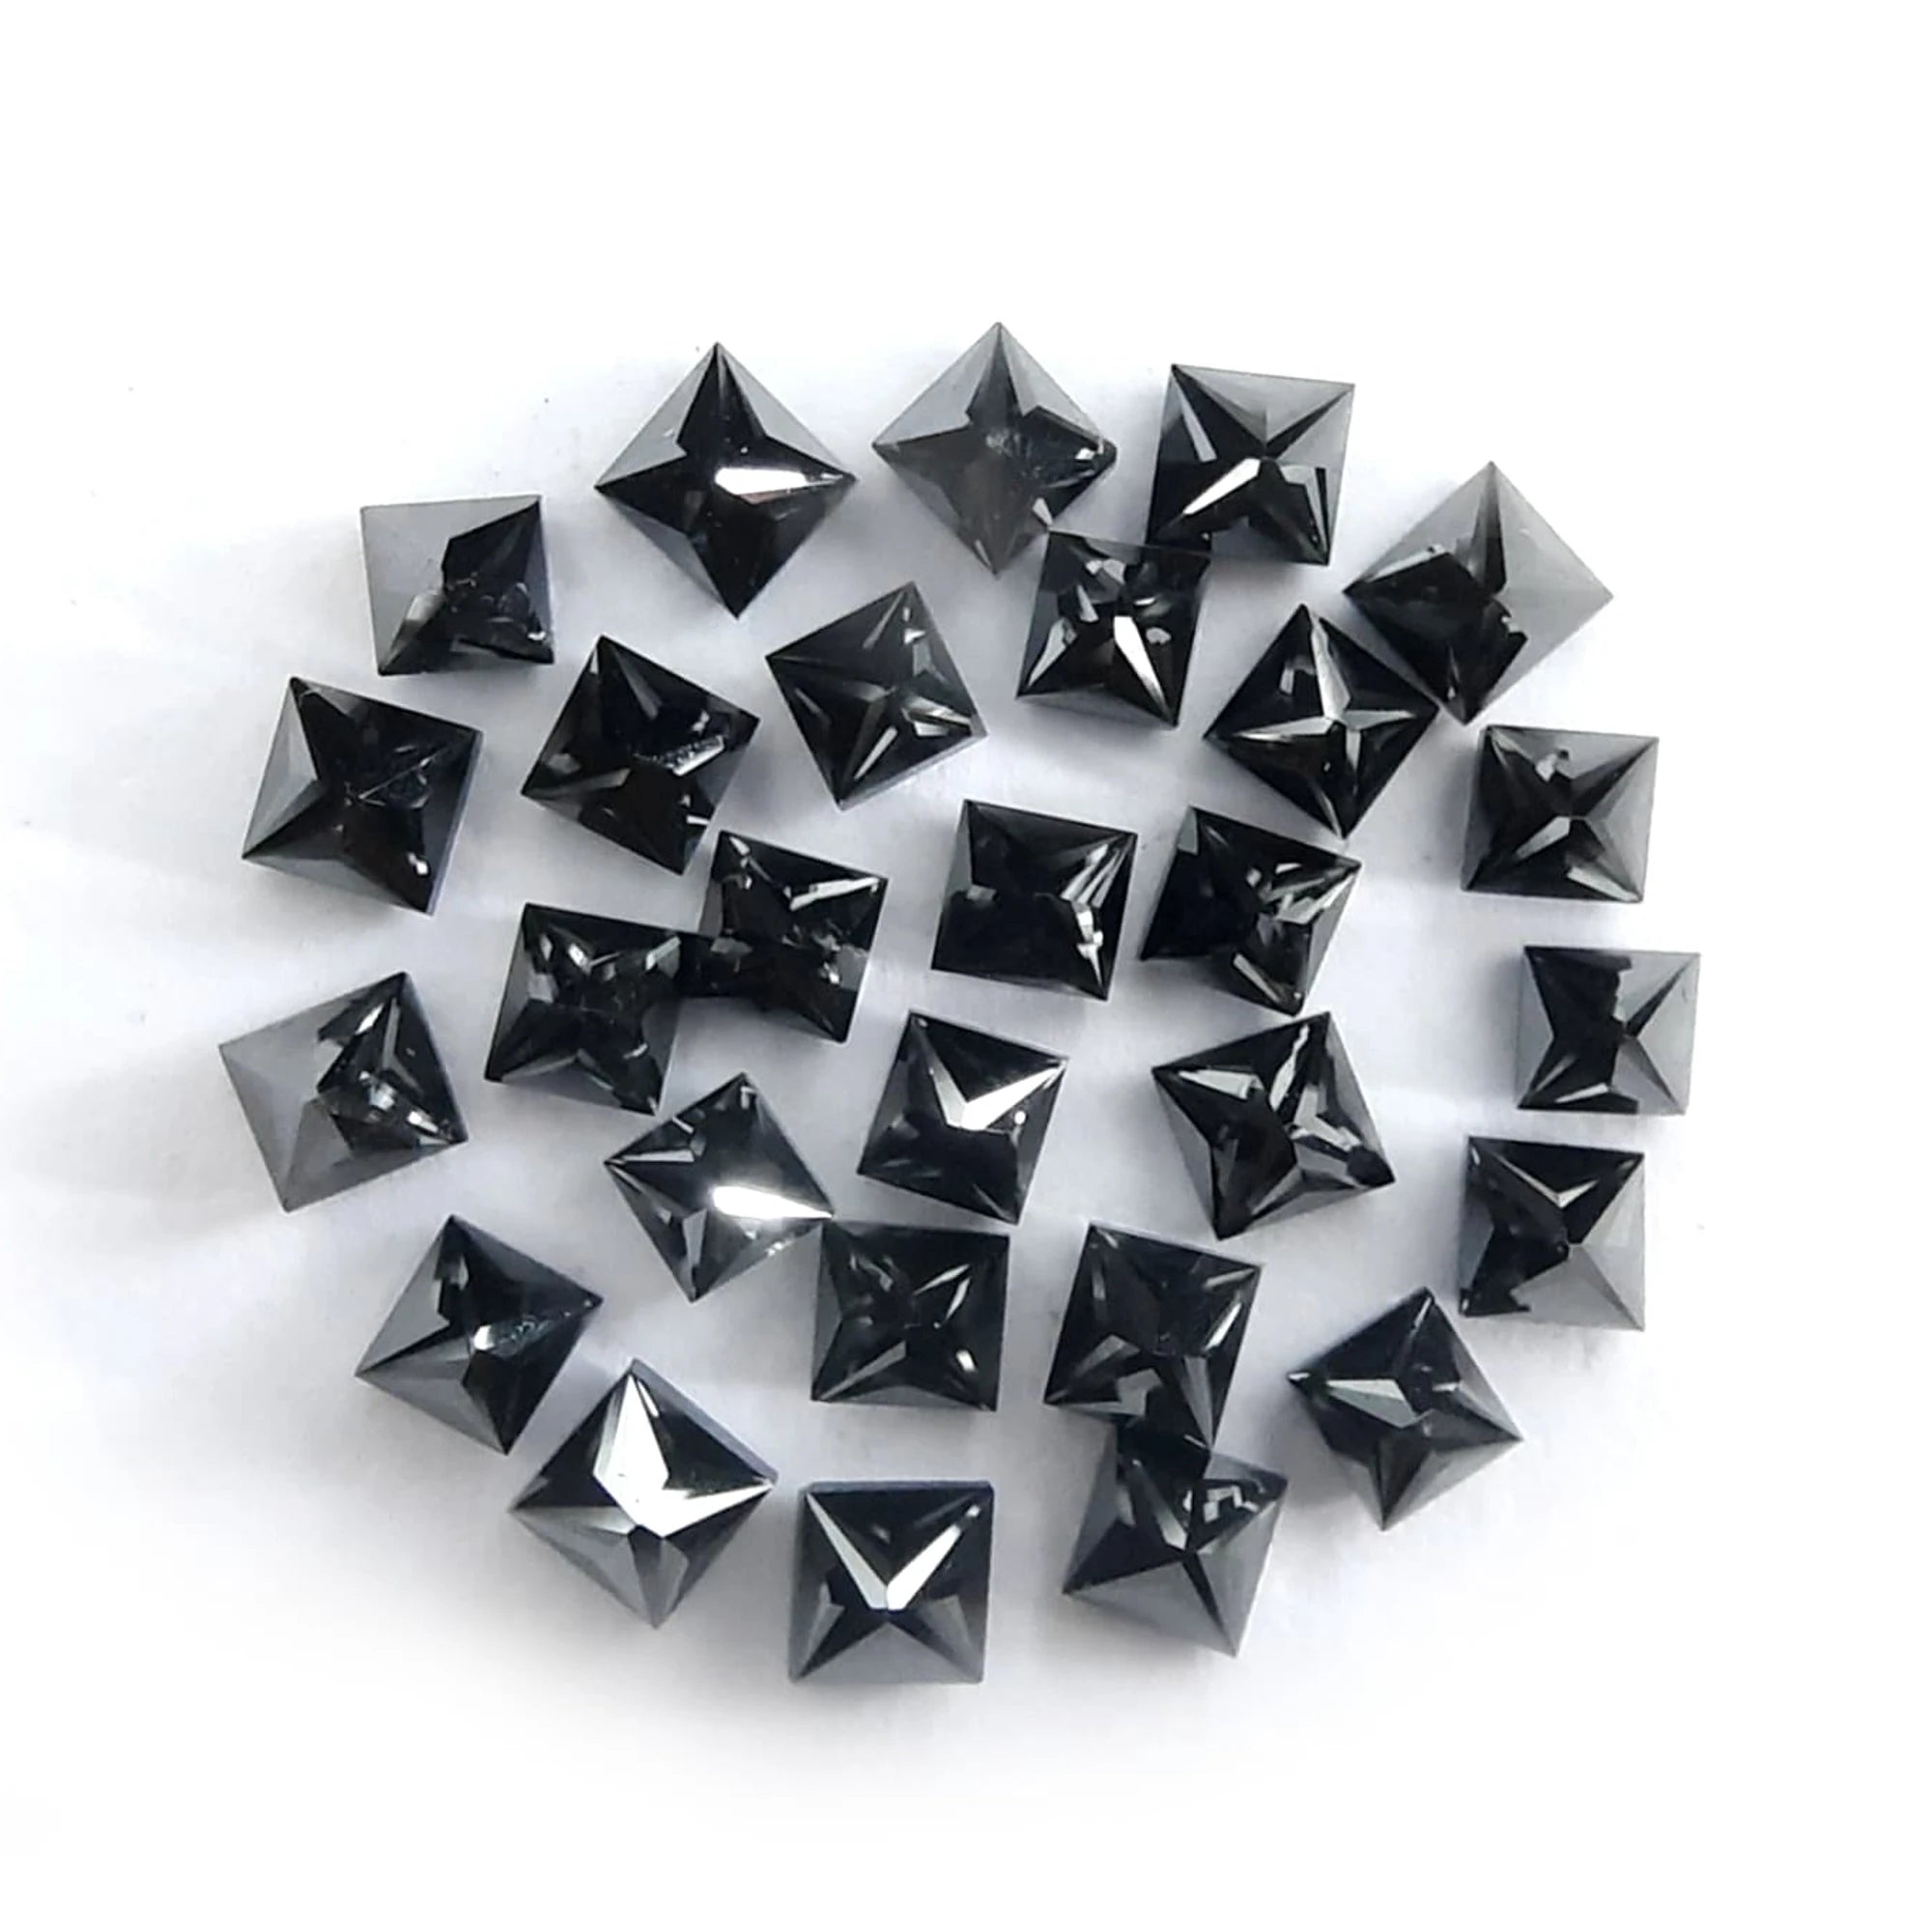 2.1 to 2.4 MM Princess Cut Black Diamonds Lot